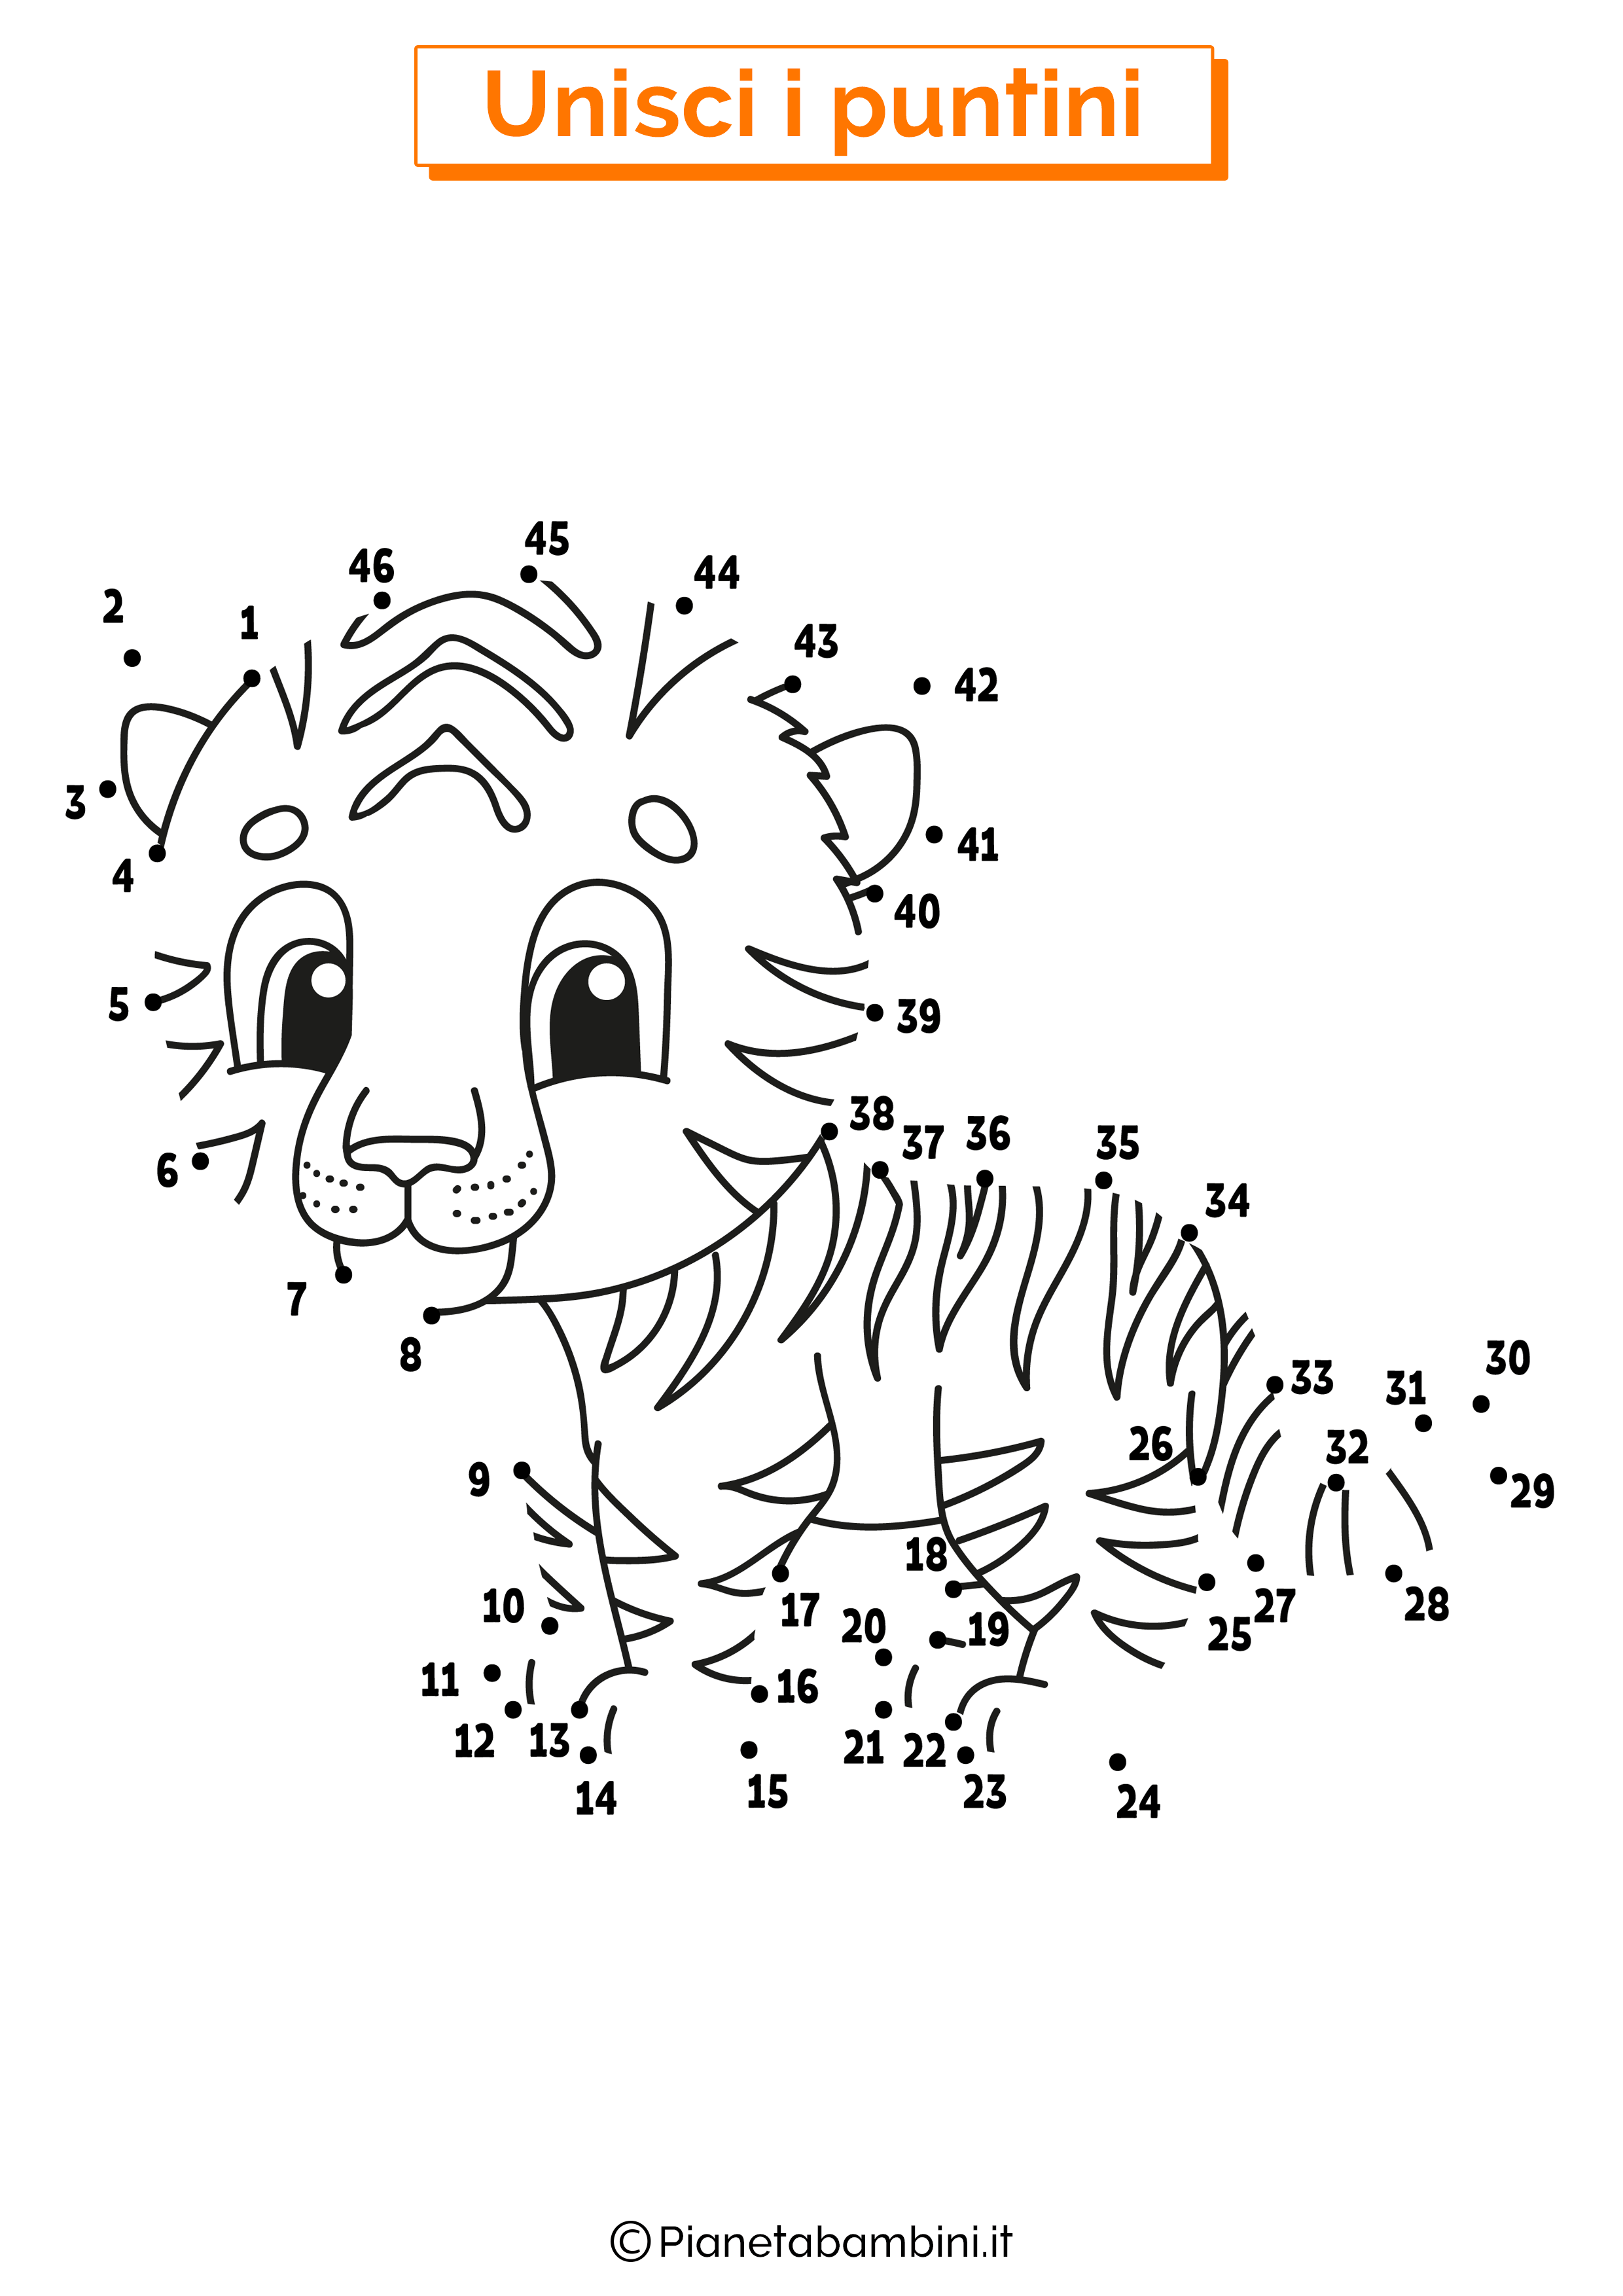 Disegno unisci i puntini 1-40 tigre